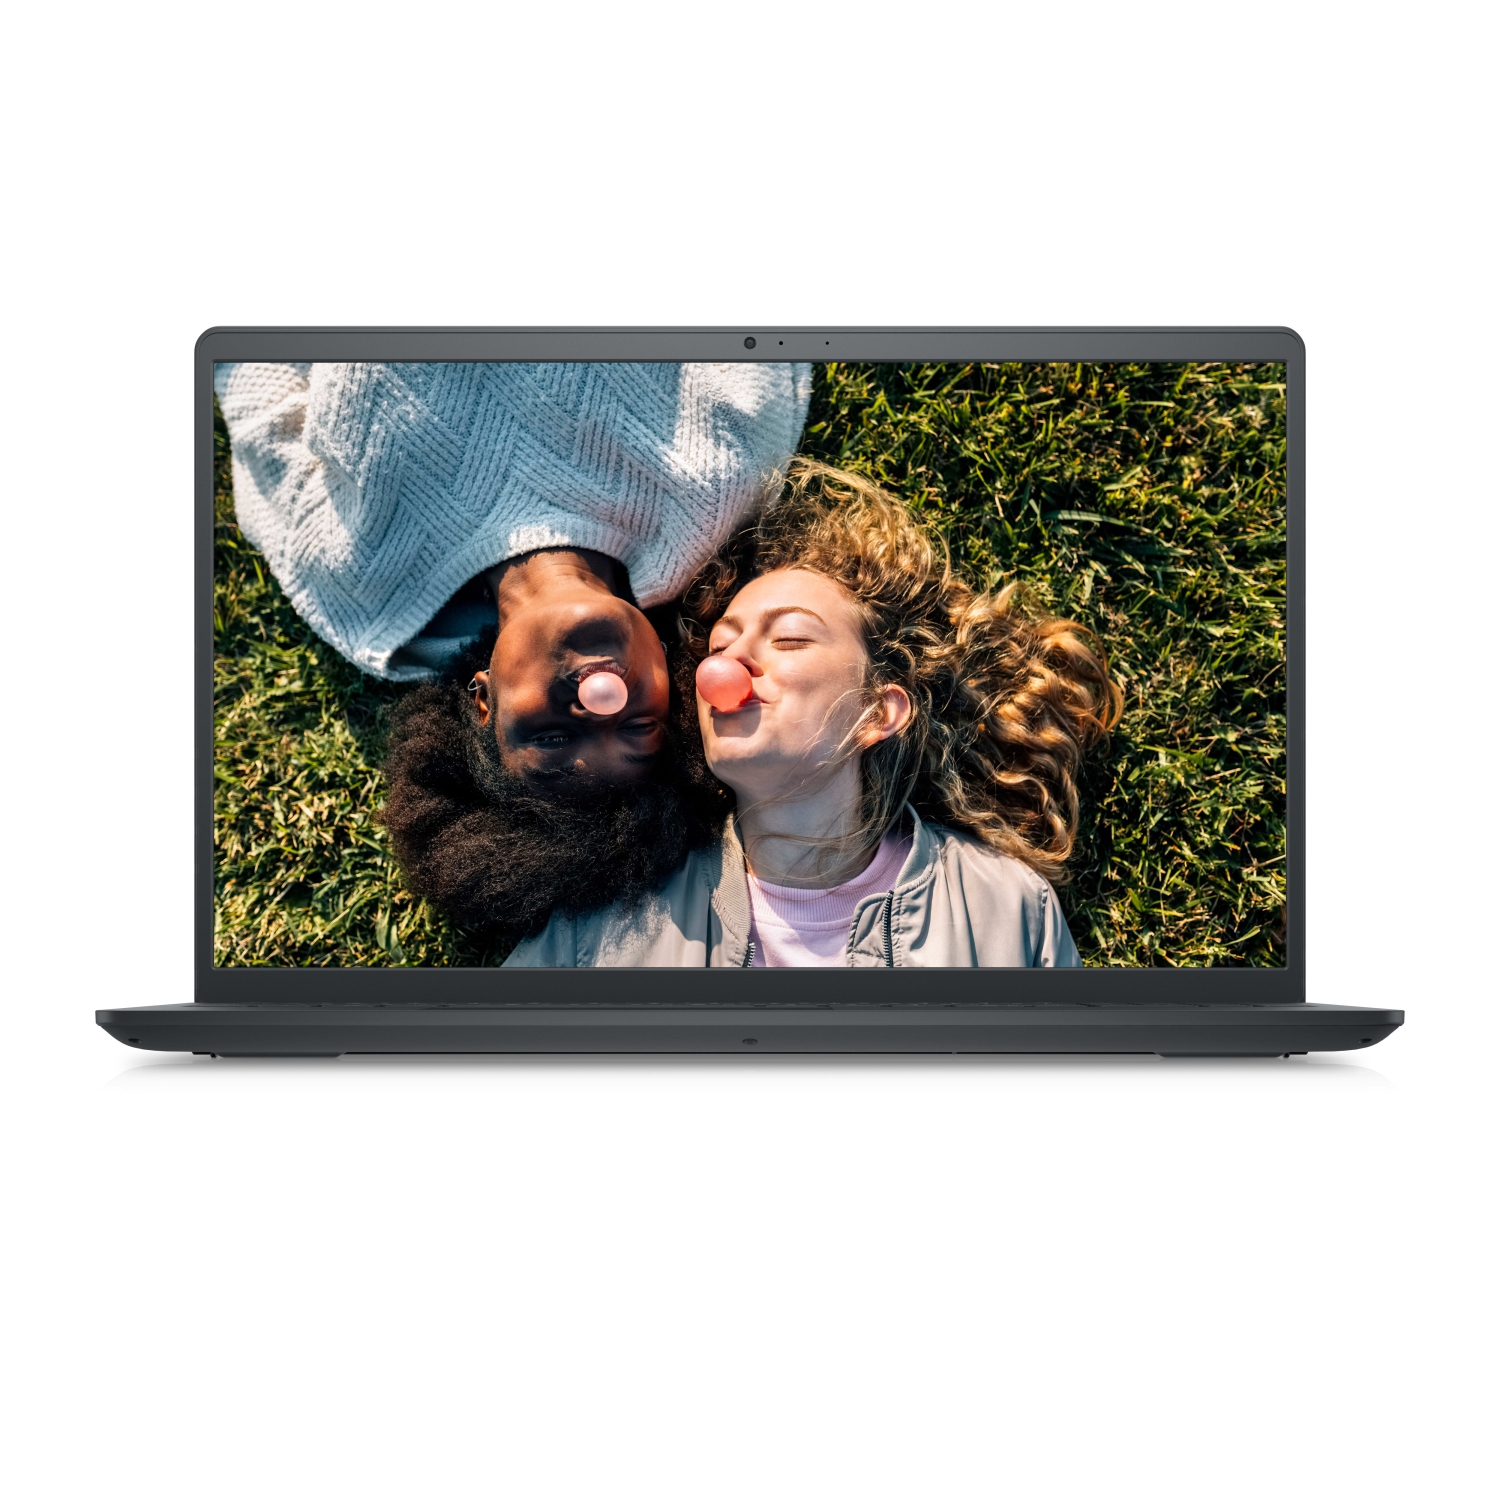 Dell Inspiron 3511 Laptop (2021) | 15.6" FHD | Core i7 - 512GB SSD - 16GB RAM | 4 Cores @ 4.7 GHz - 11th Gen CPU